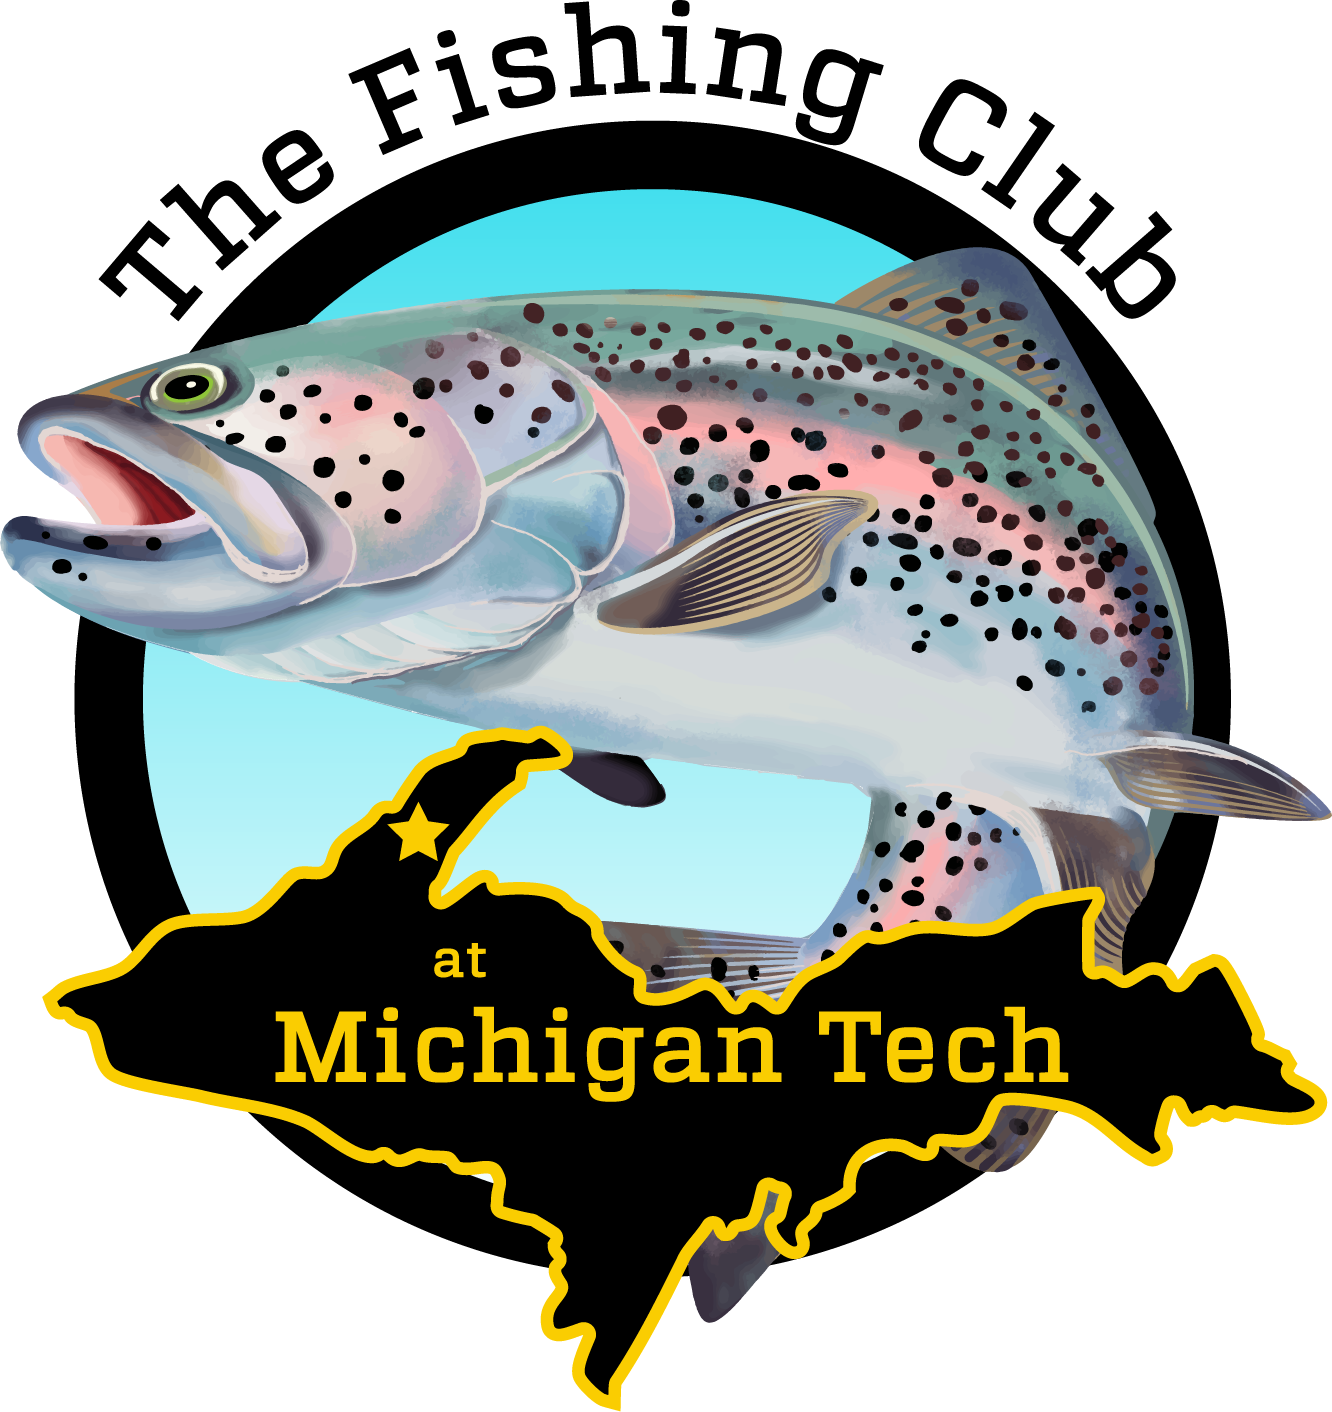 The Fishing Club at Michigan Tech